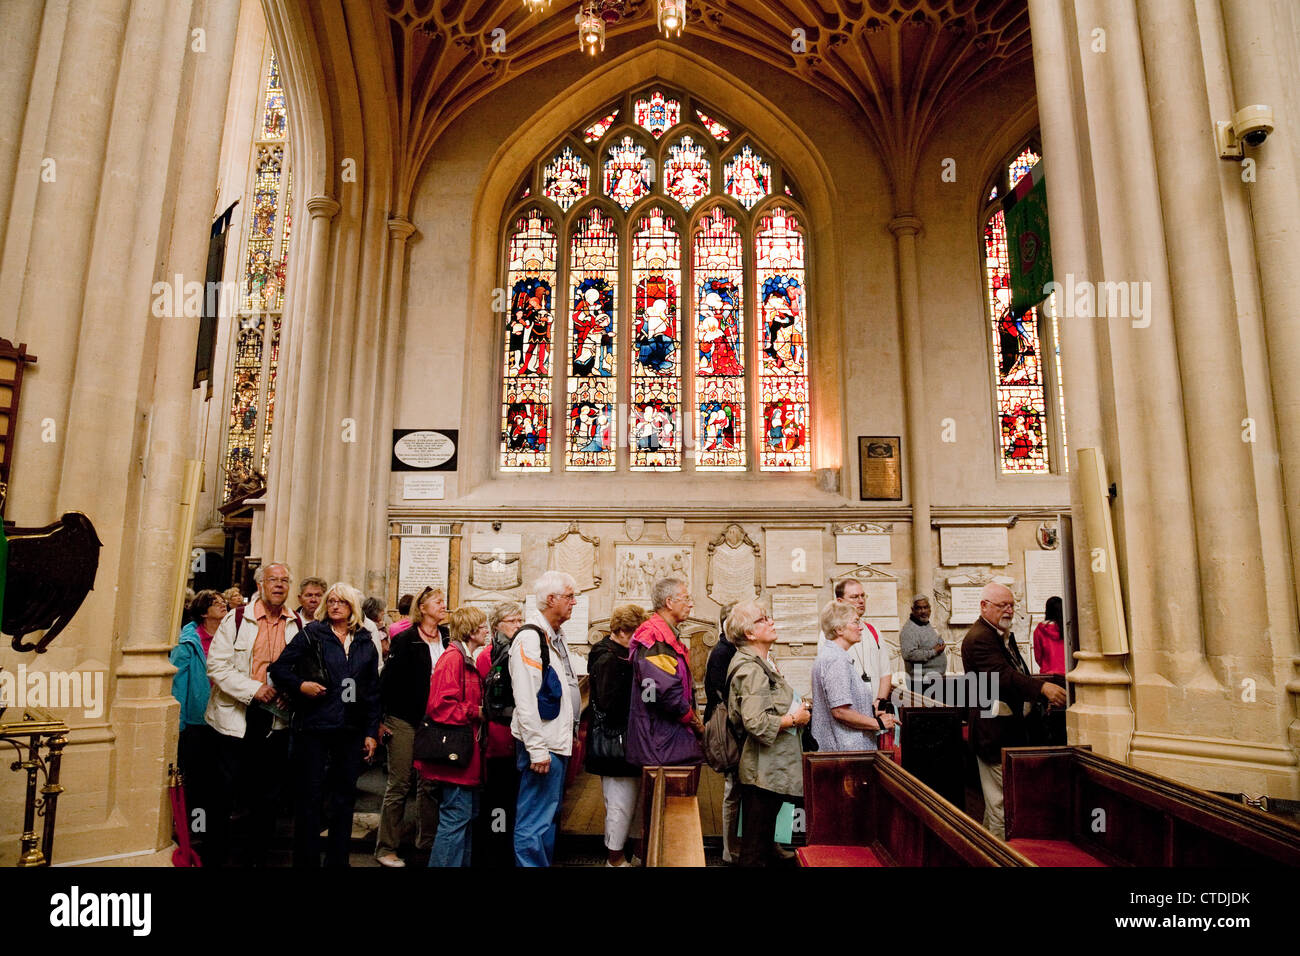 Tourists in Bath Abbey interior, Bath, Somerset UK Stock Photo